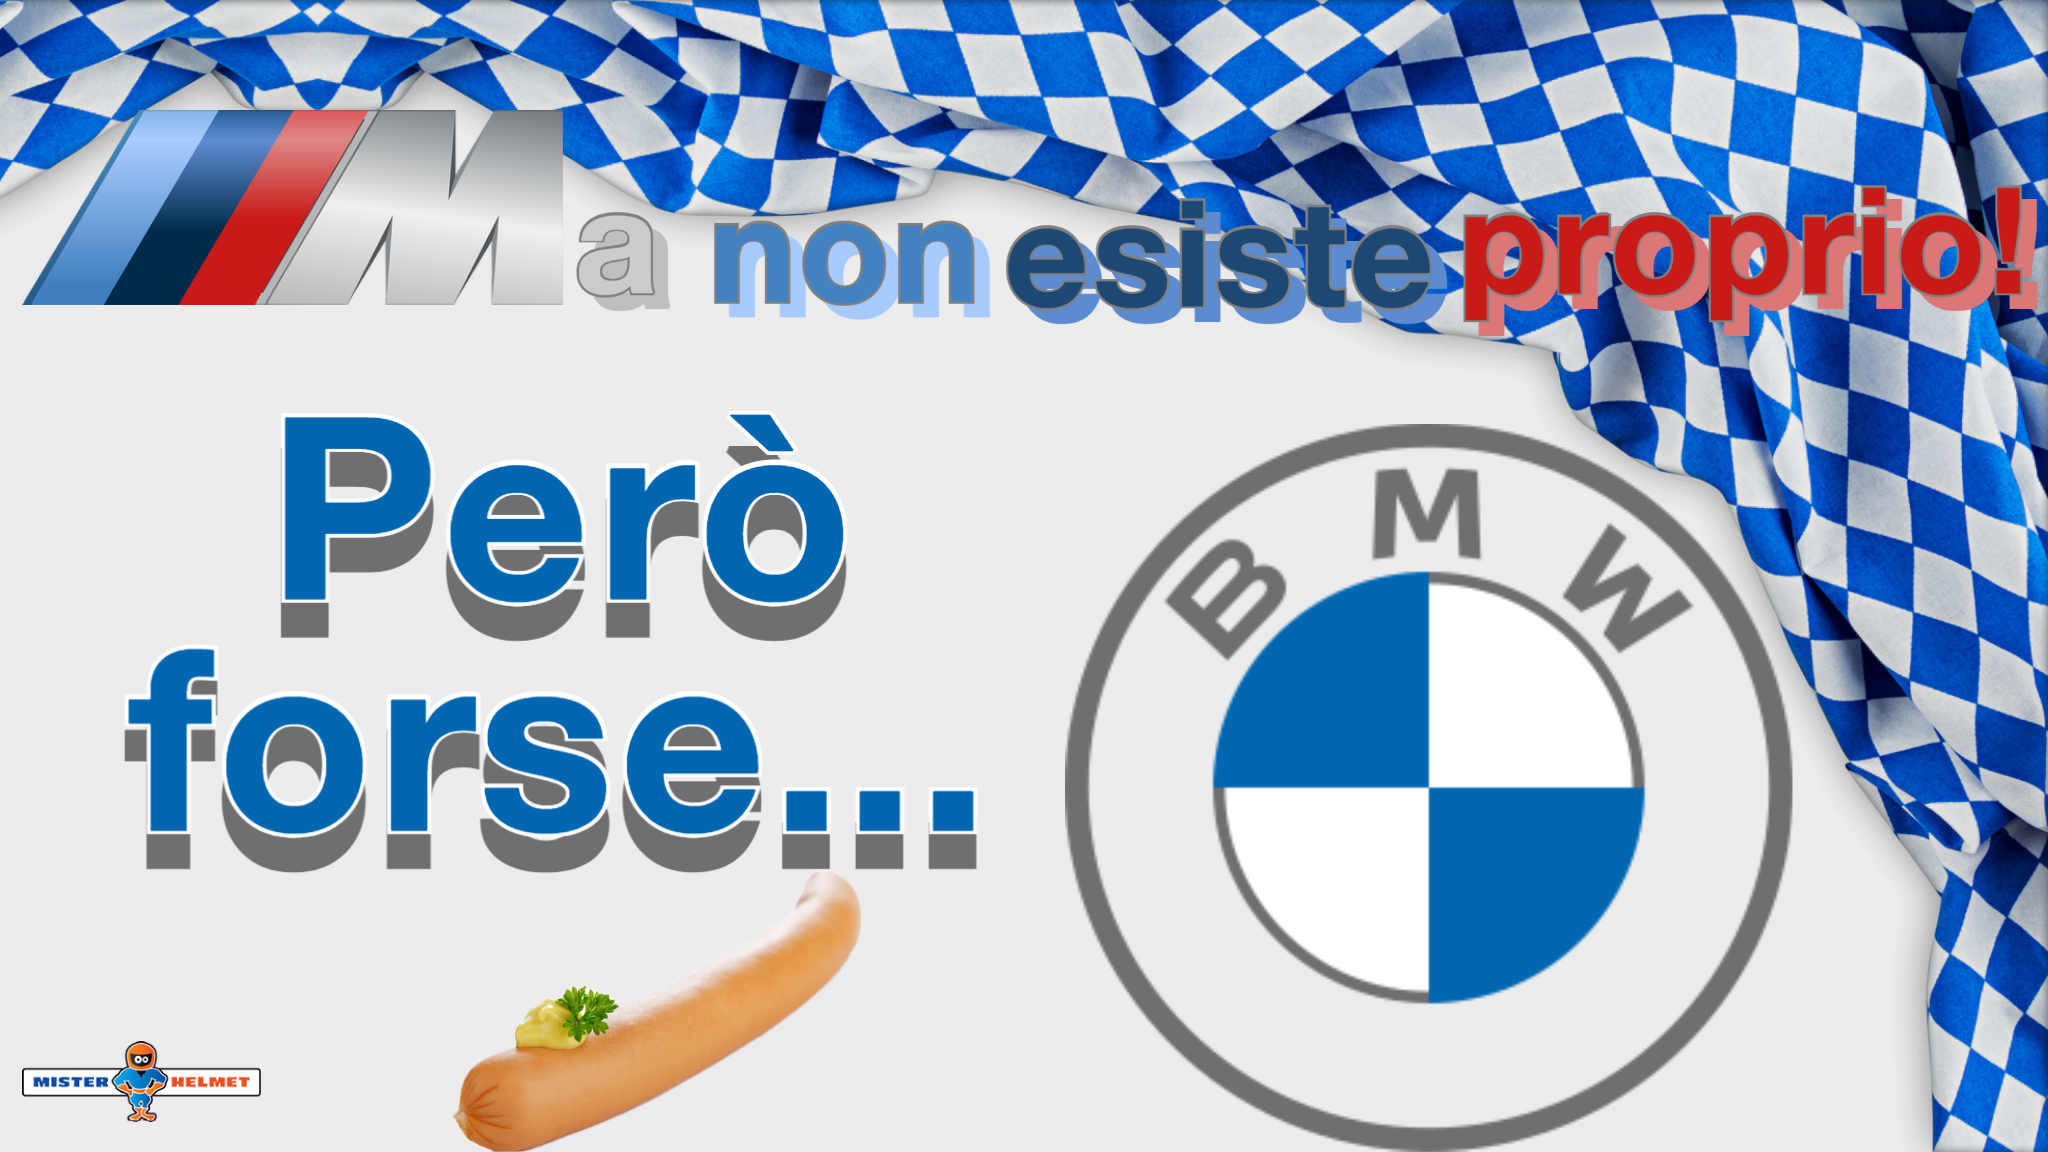 Rumors: Ezpeleta vuole a tutti i costi un motore BMW in una MotoGP… ibrida!